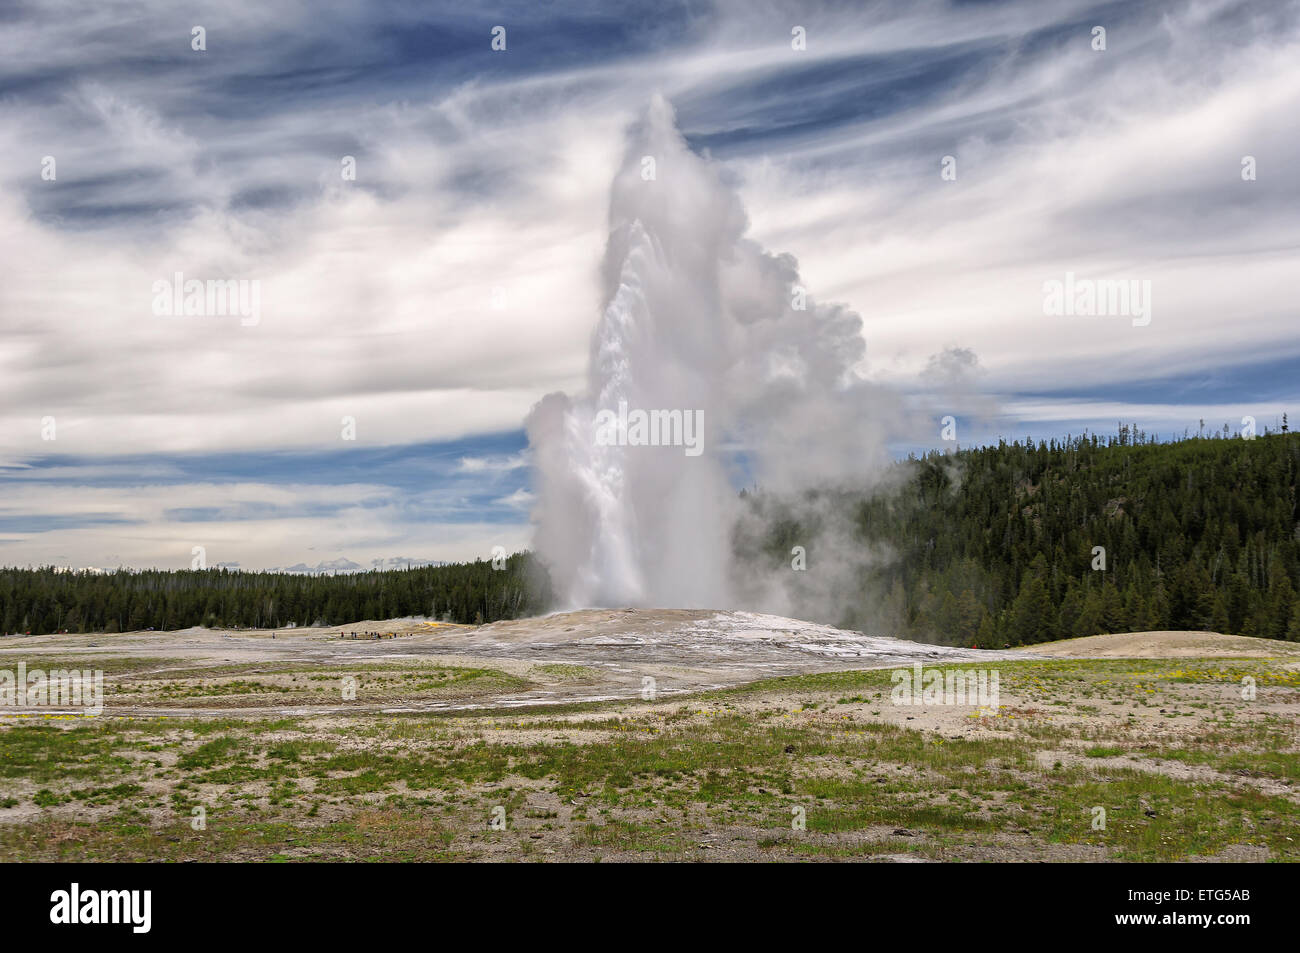 Eruption of Old Faithful geyser at Yellowstone National Park, Wyoming, USA Stock Photo